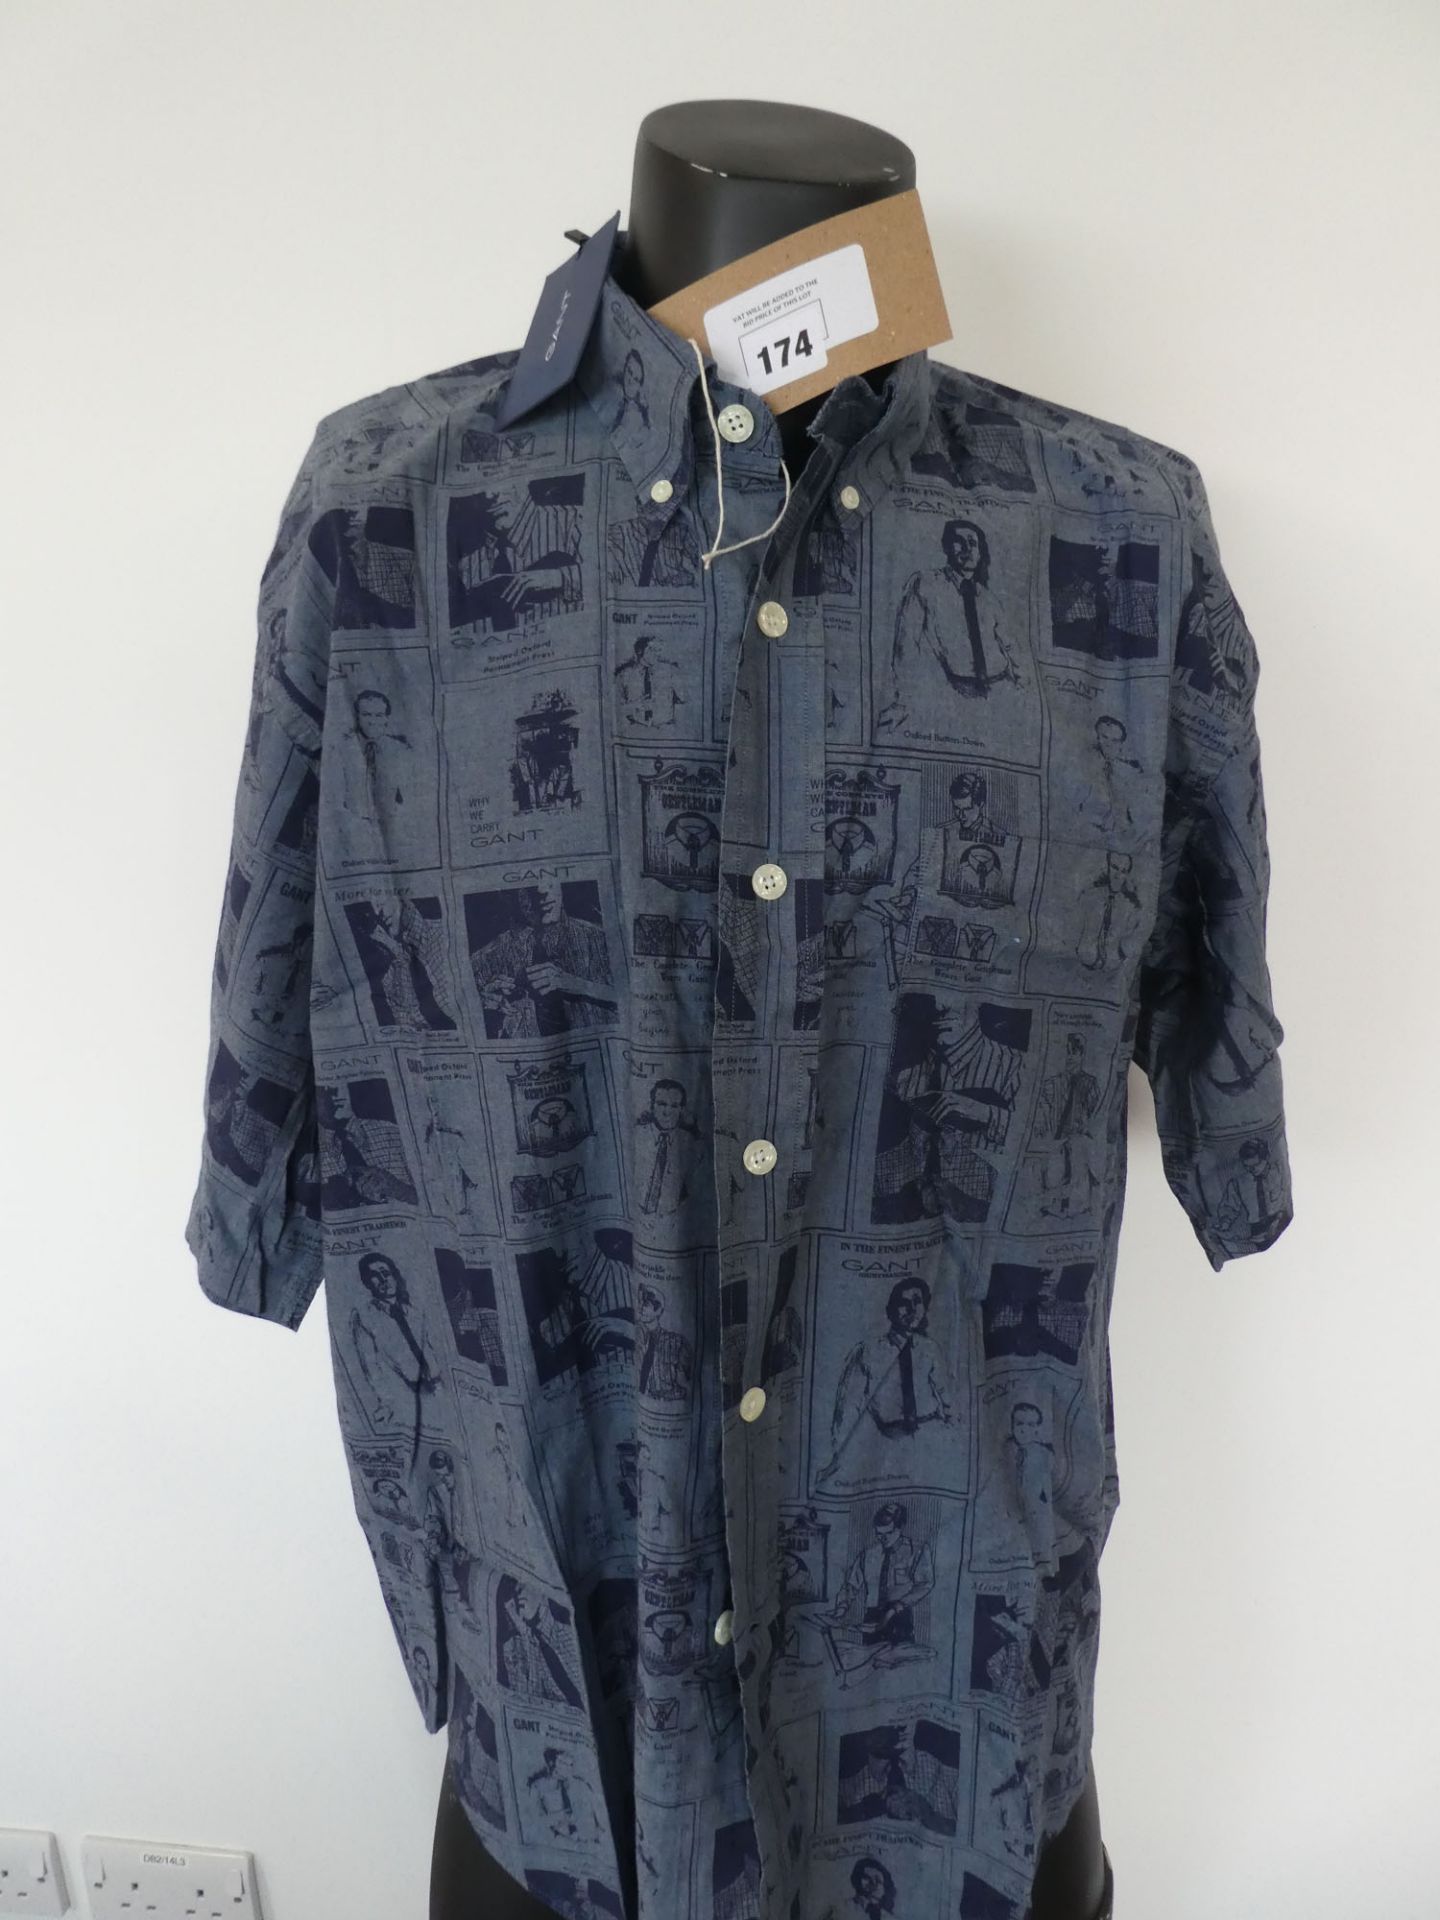 Gant PR shirtmakers shirt chambray the hugger in indigo size XL